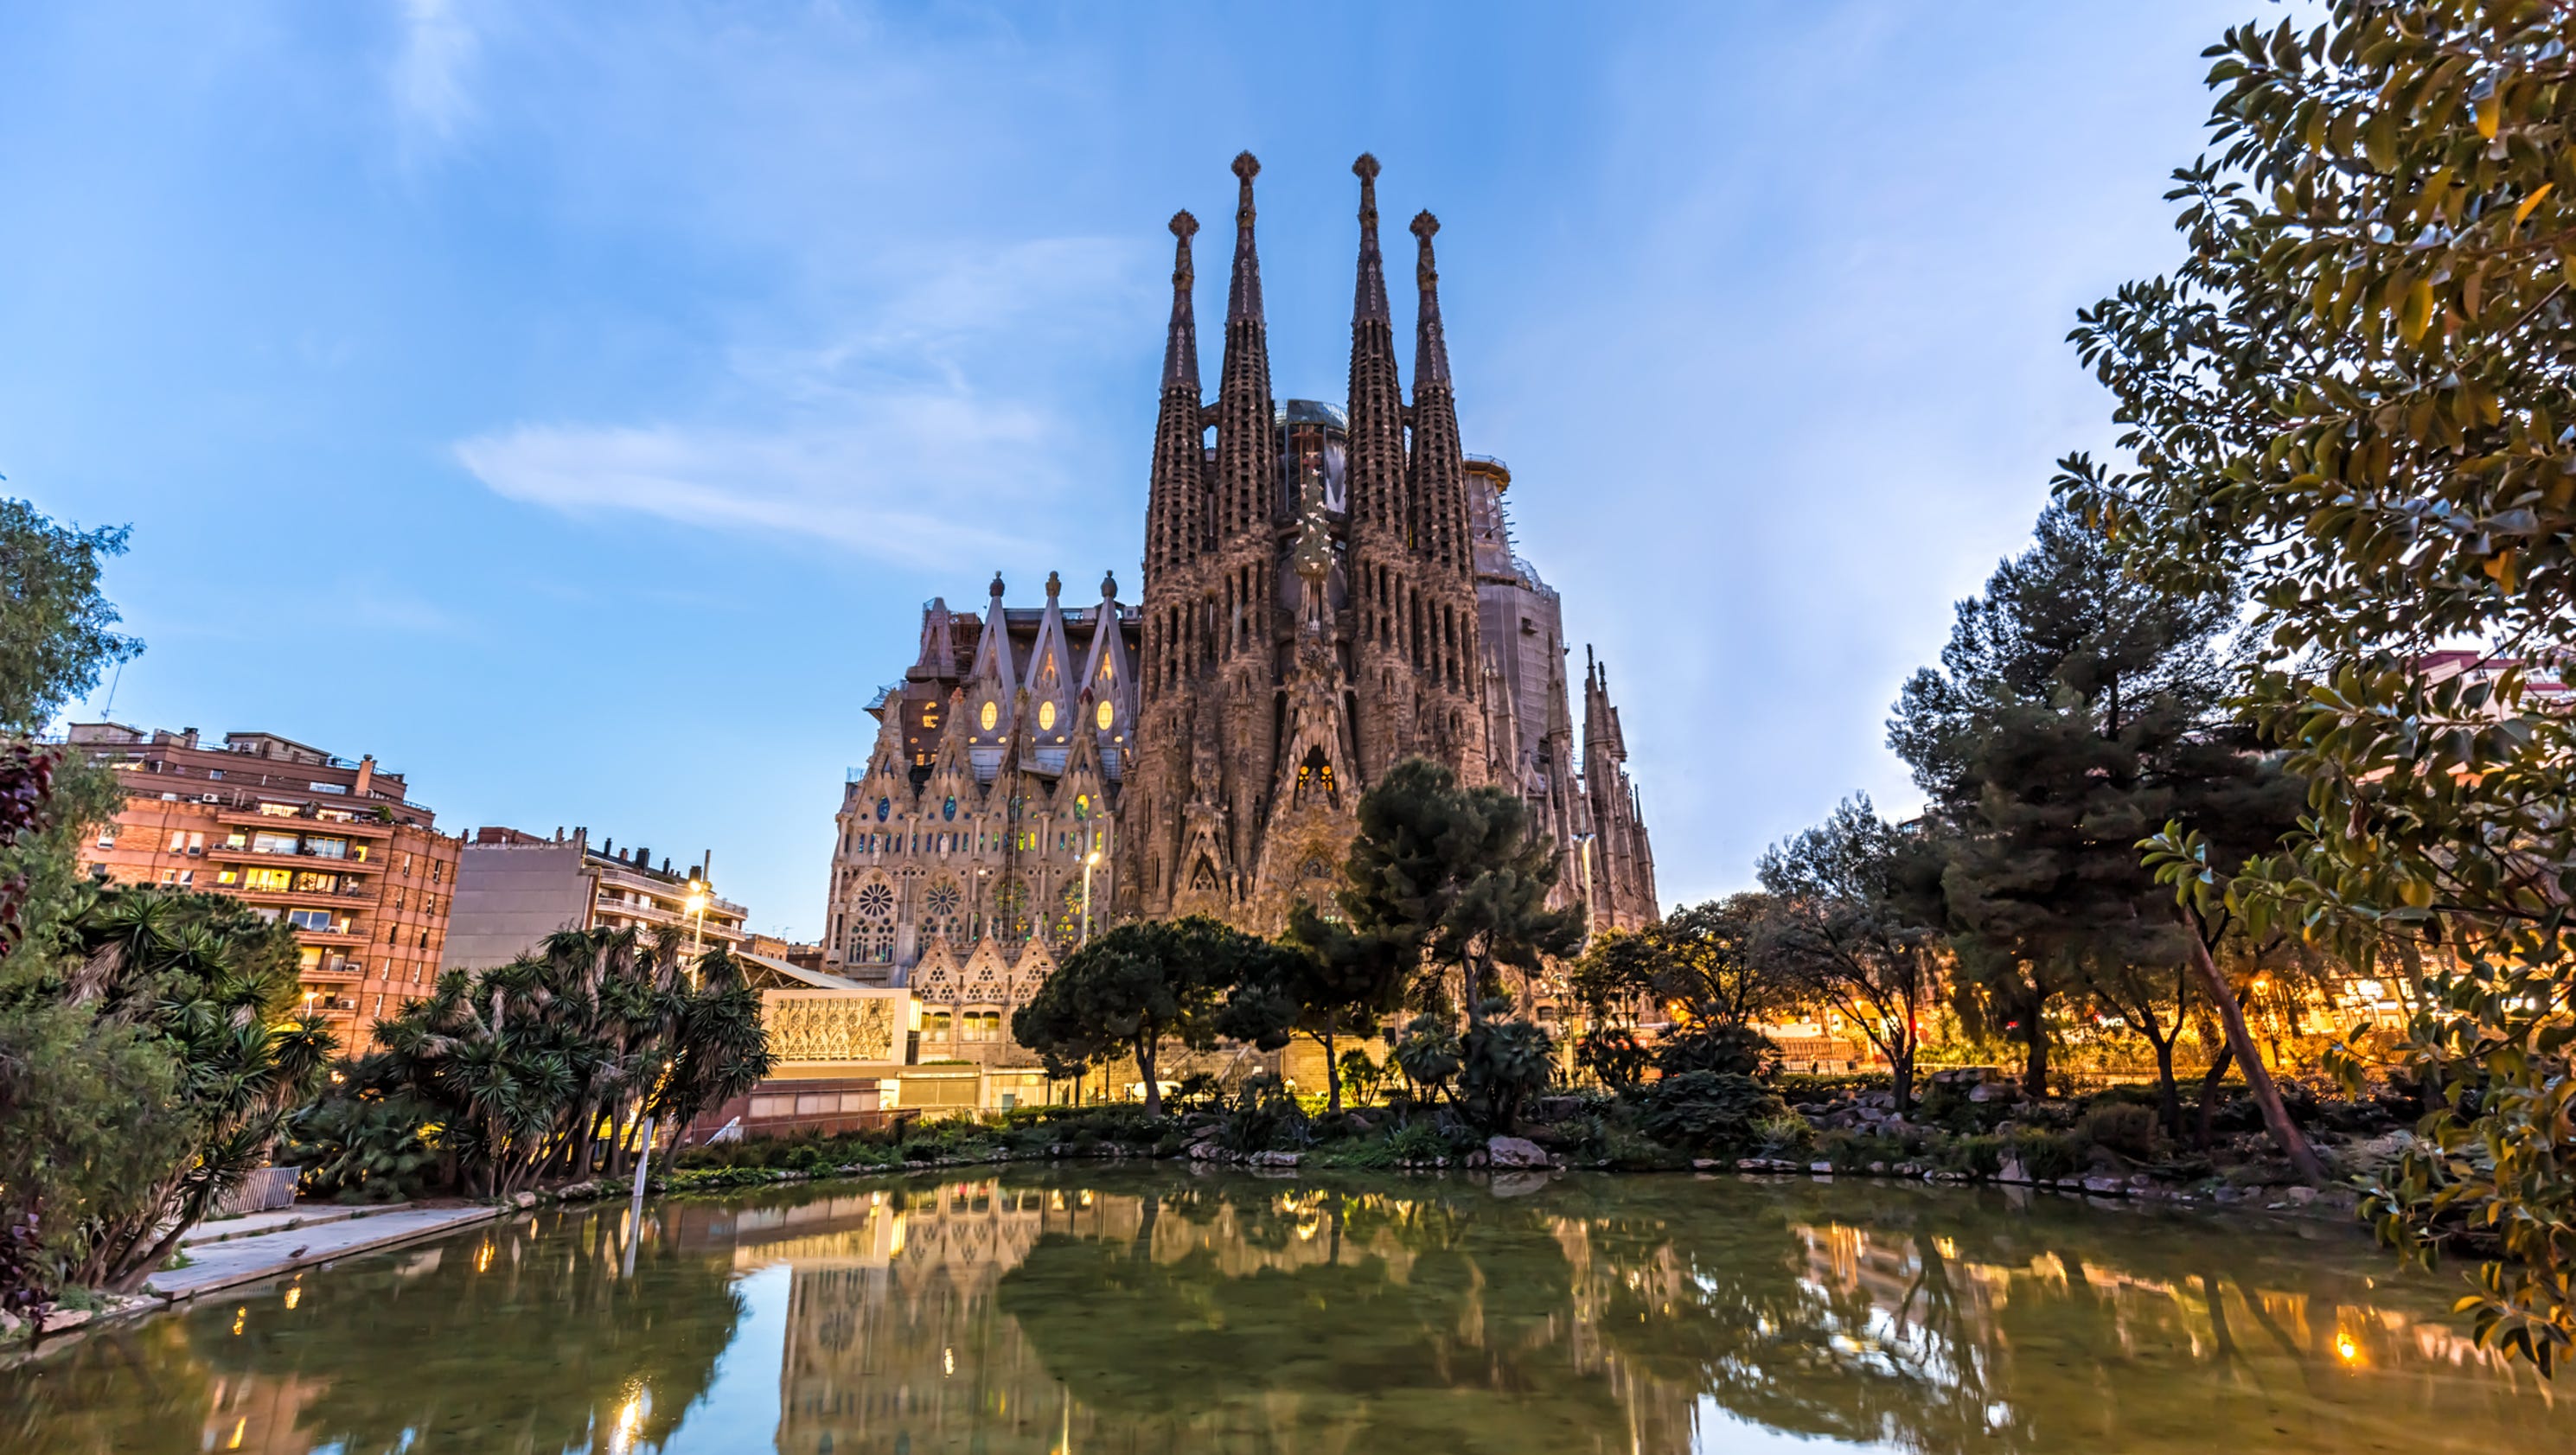 Sagrada Familia: See beautiful photos of the Barcelona landmark